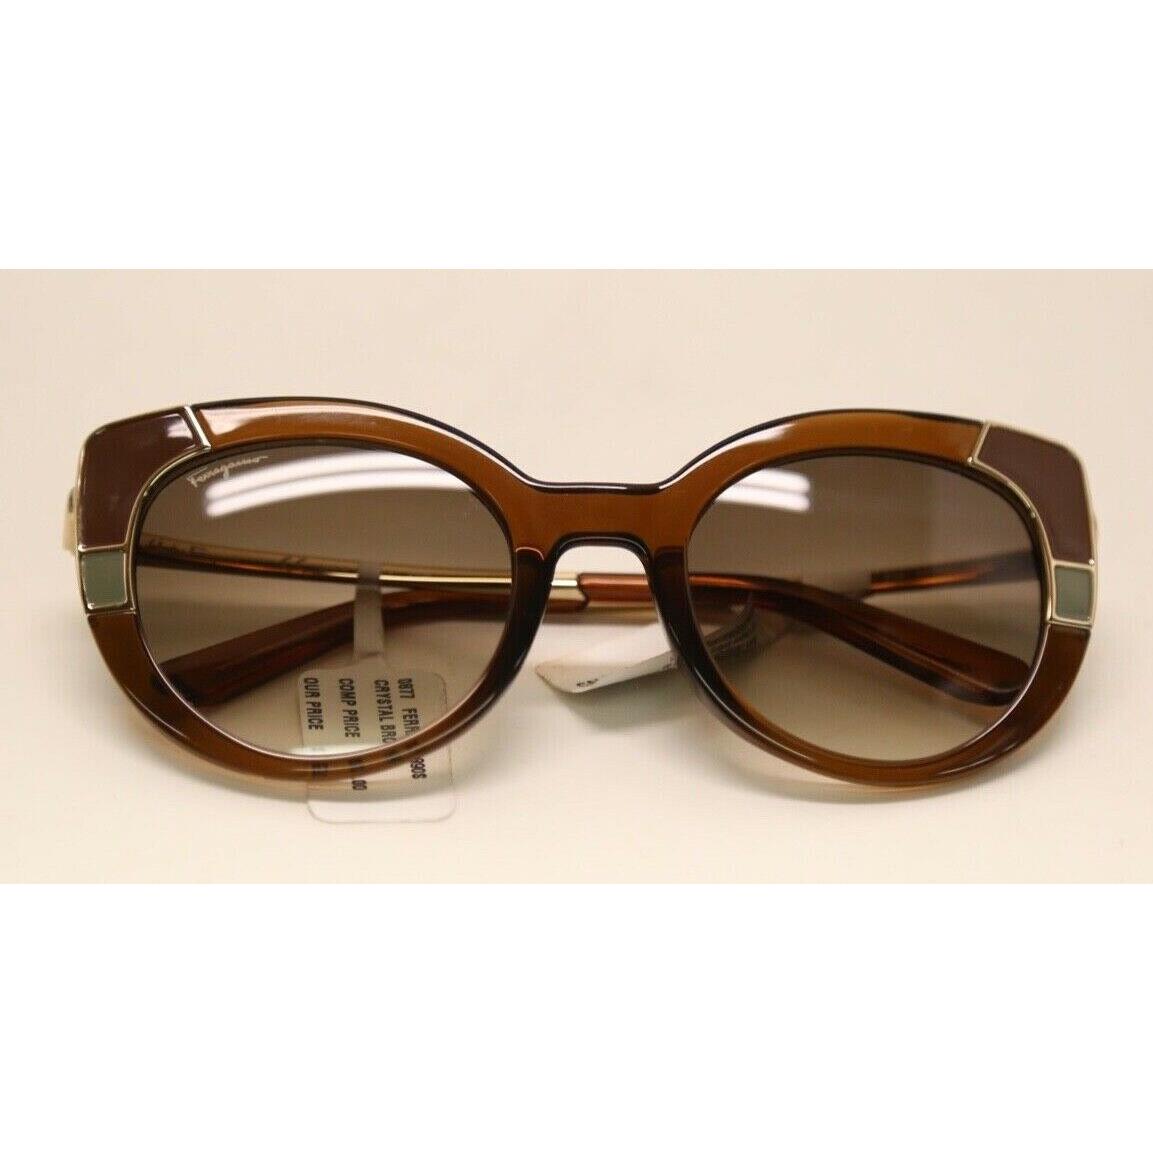 Salvatore Ferragamo sunglasses  - Crystal Brown Frame, Brown Lens 5